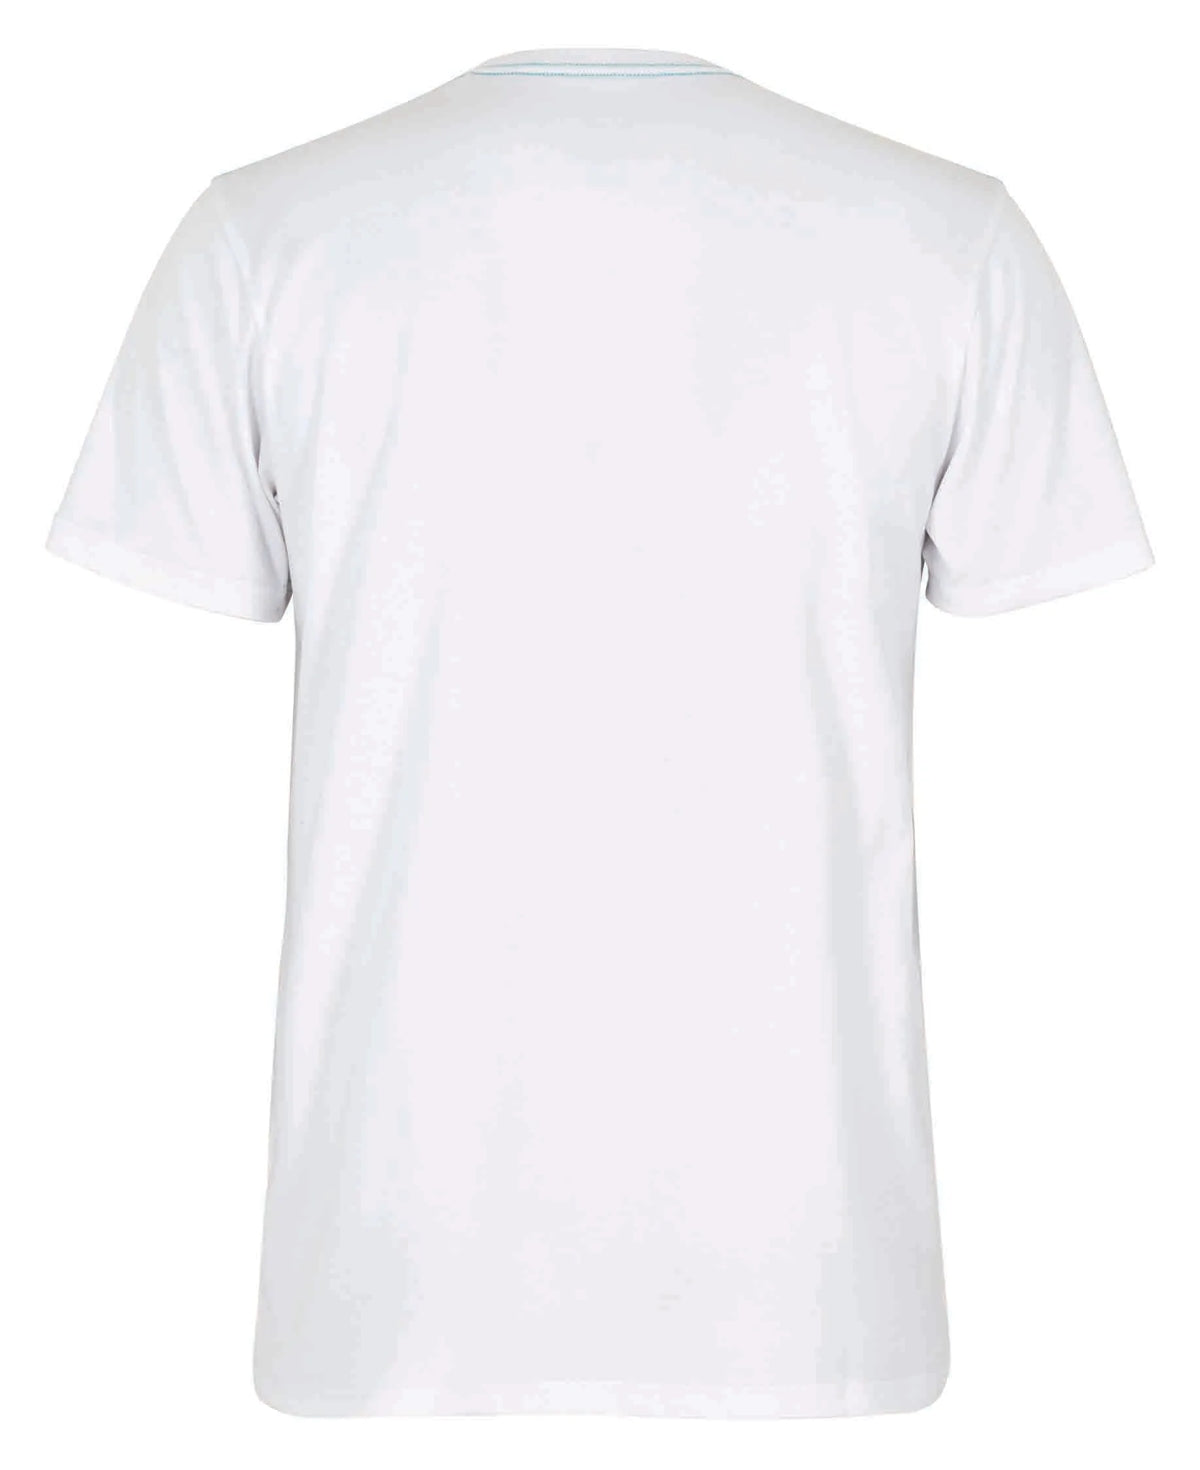 Men's white Vortex circular logo print tee in white.